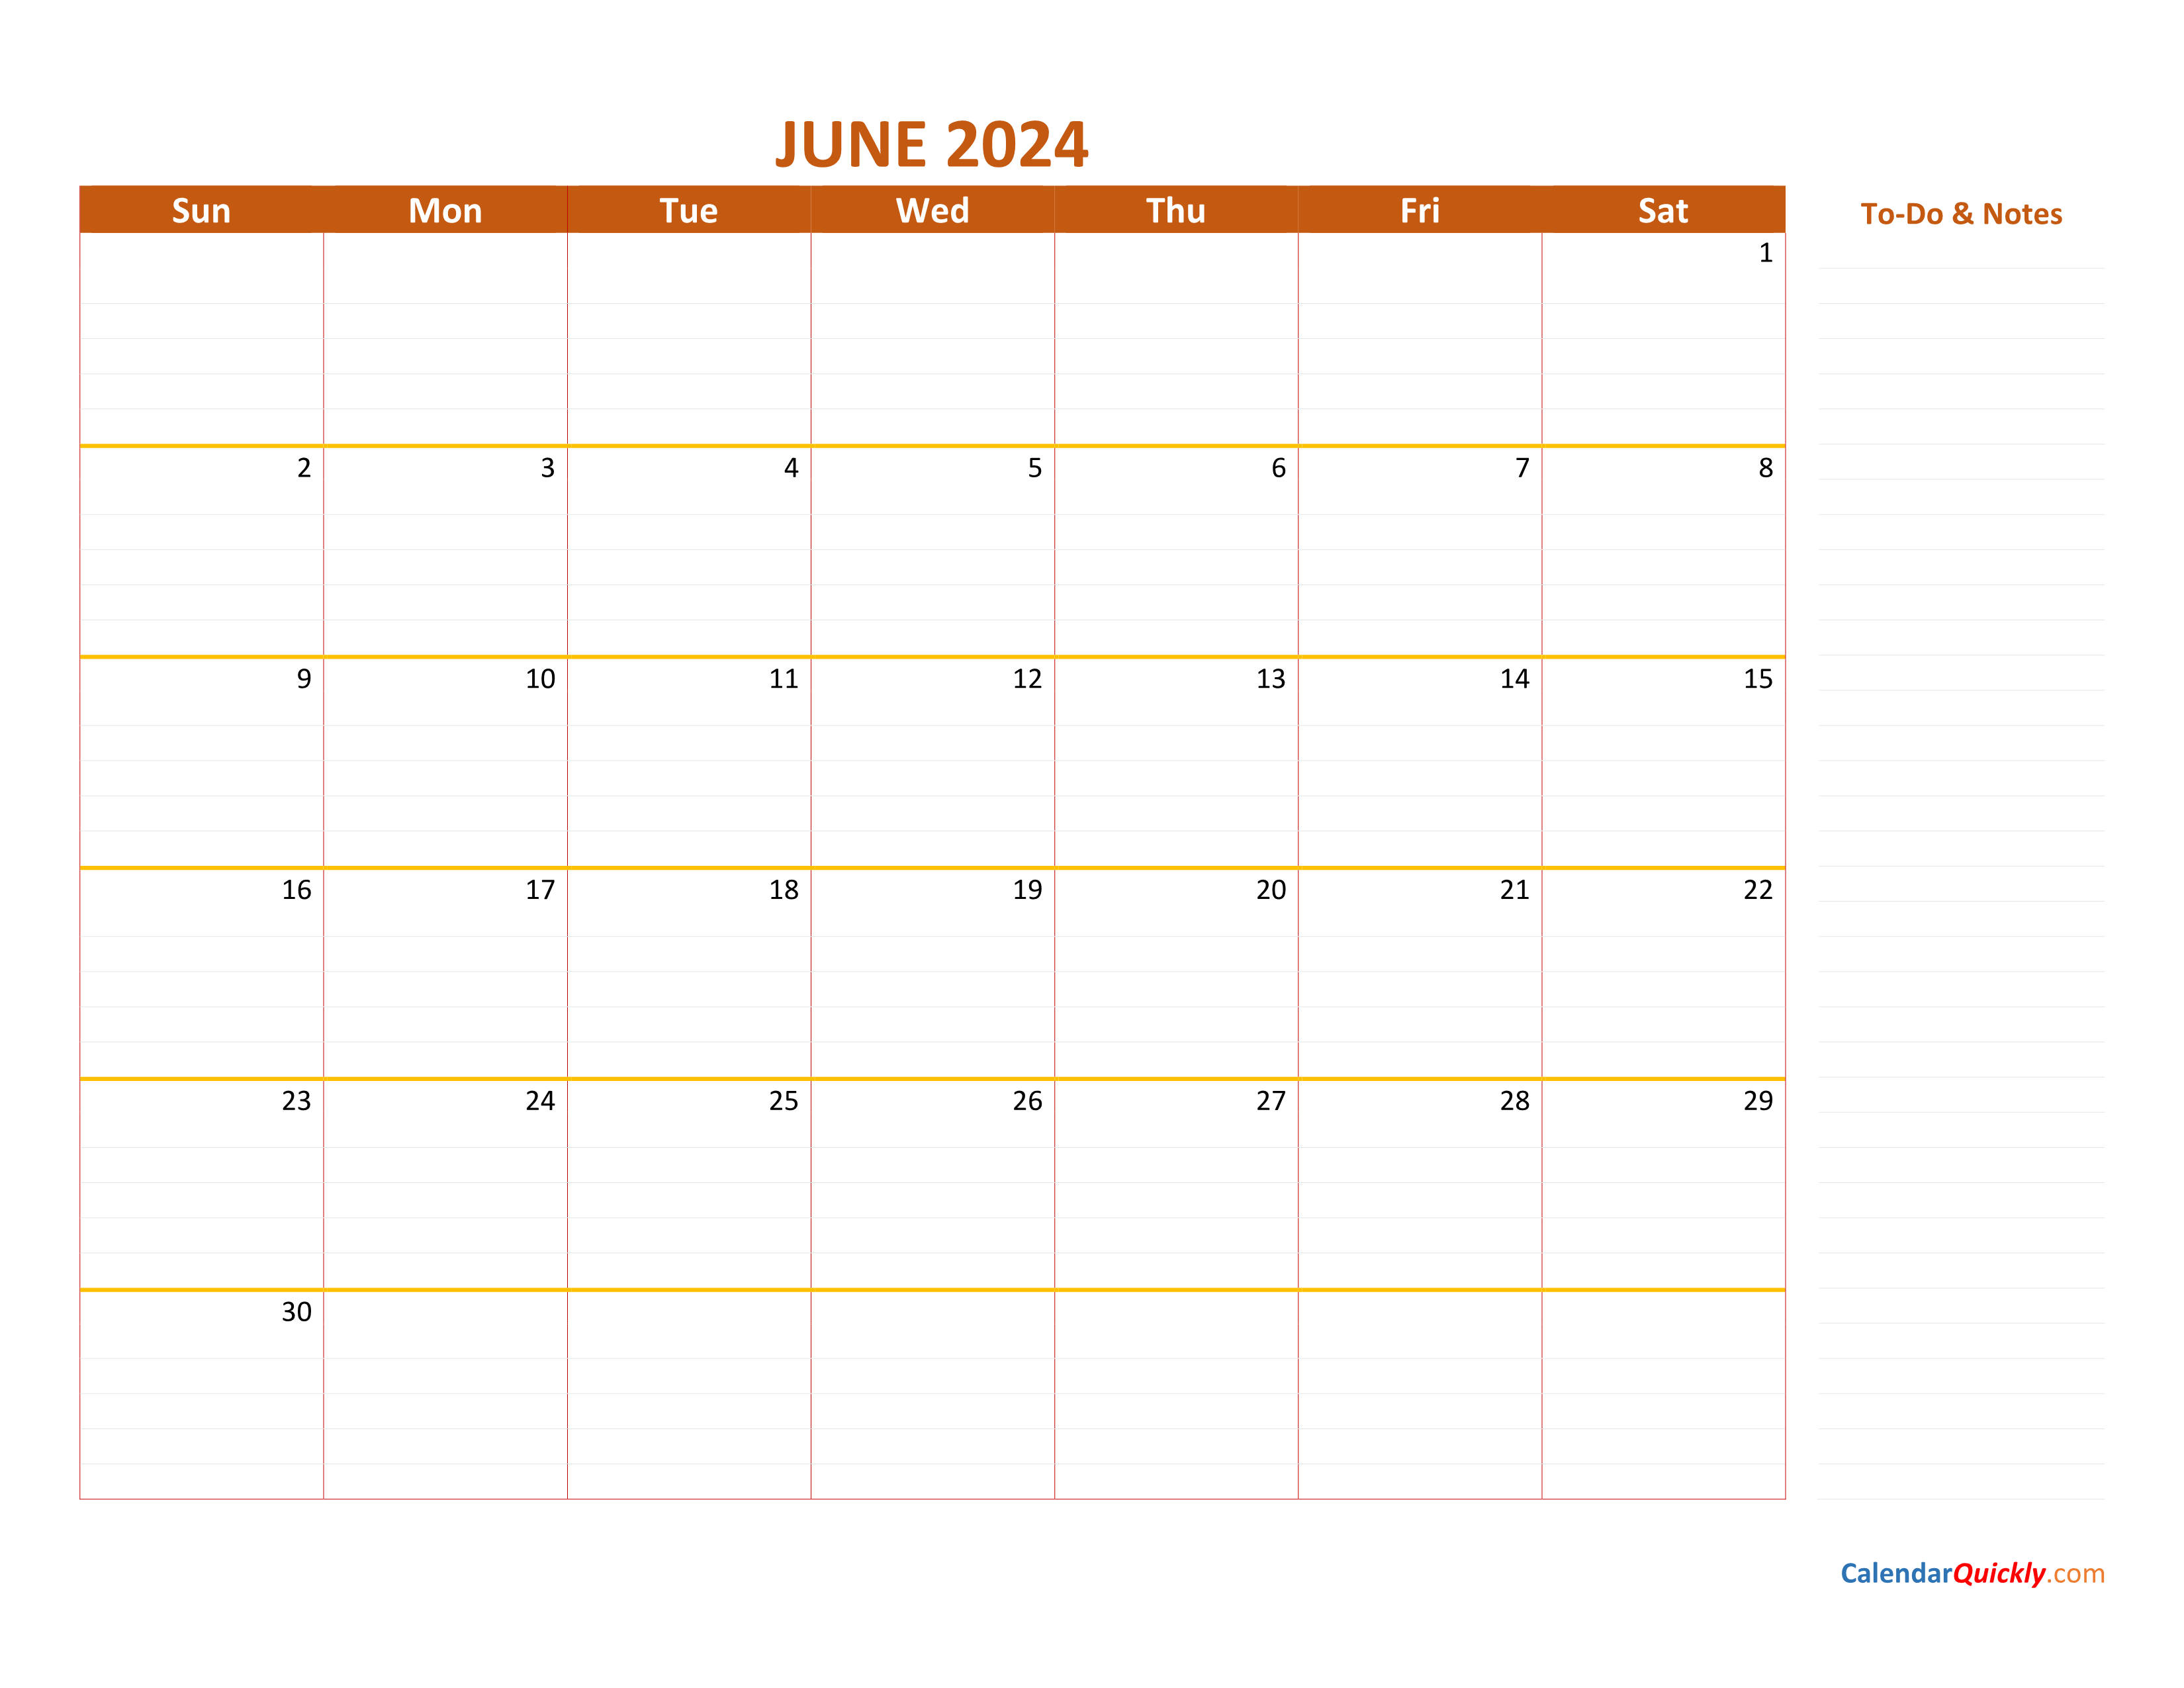 June 2024 Calendar | Calendar Quickly